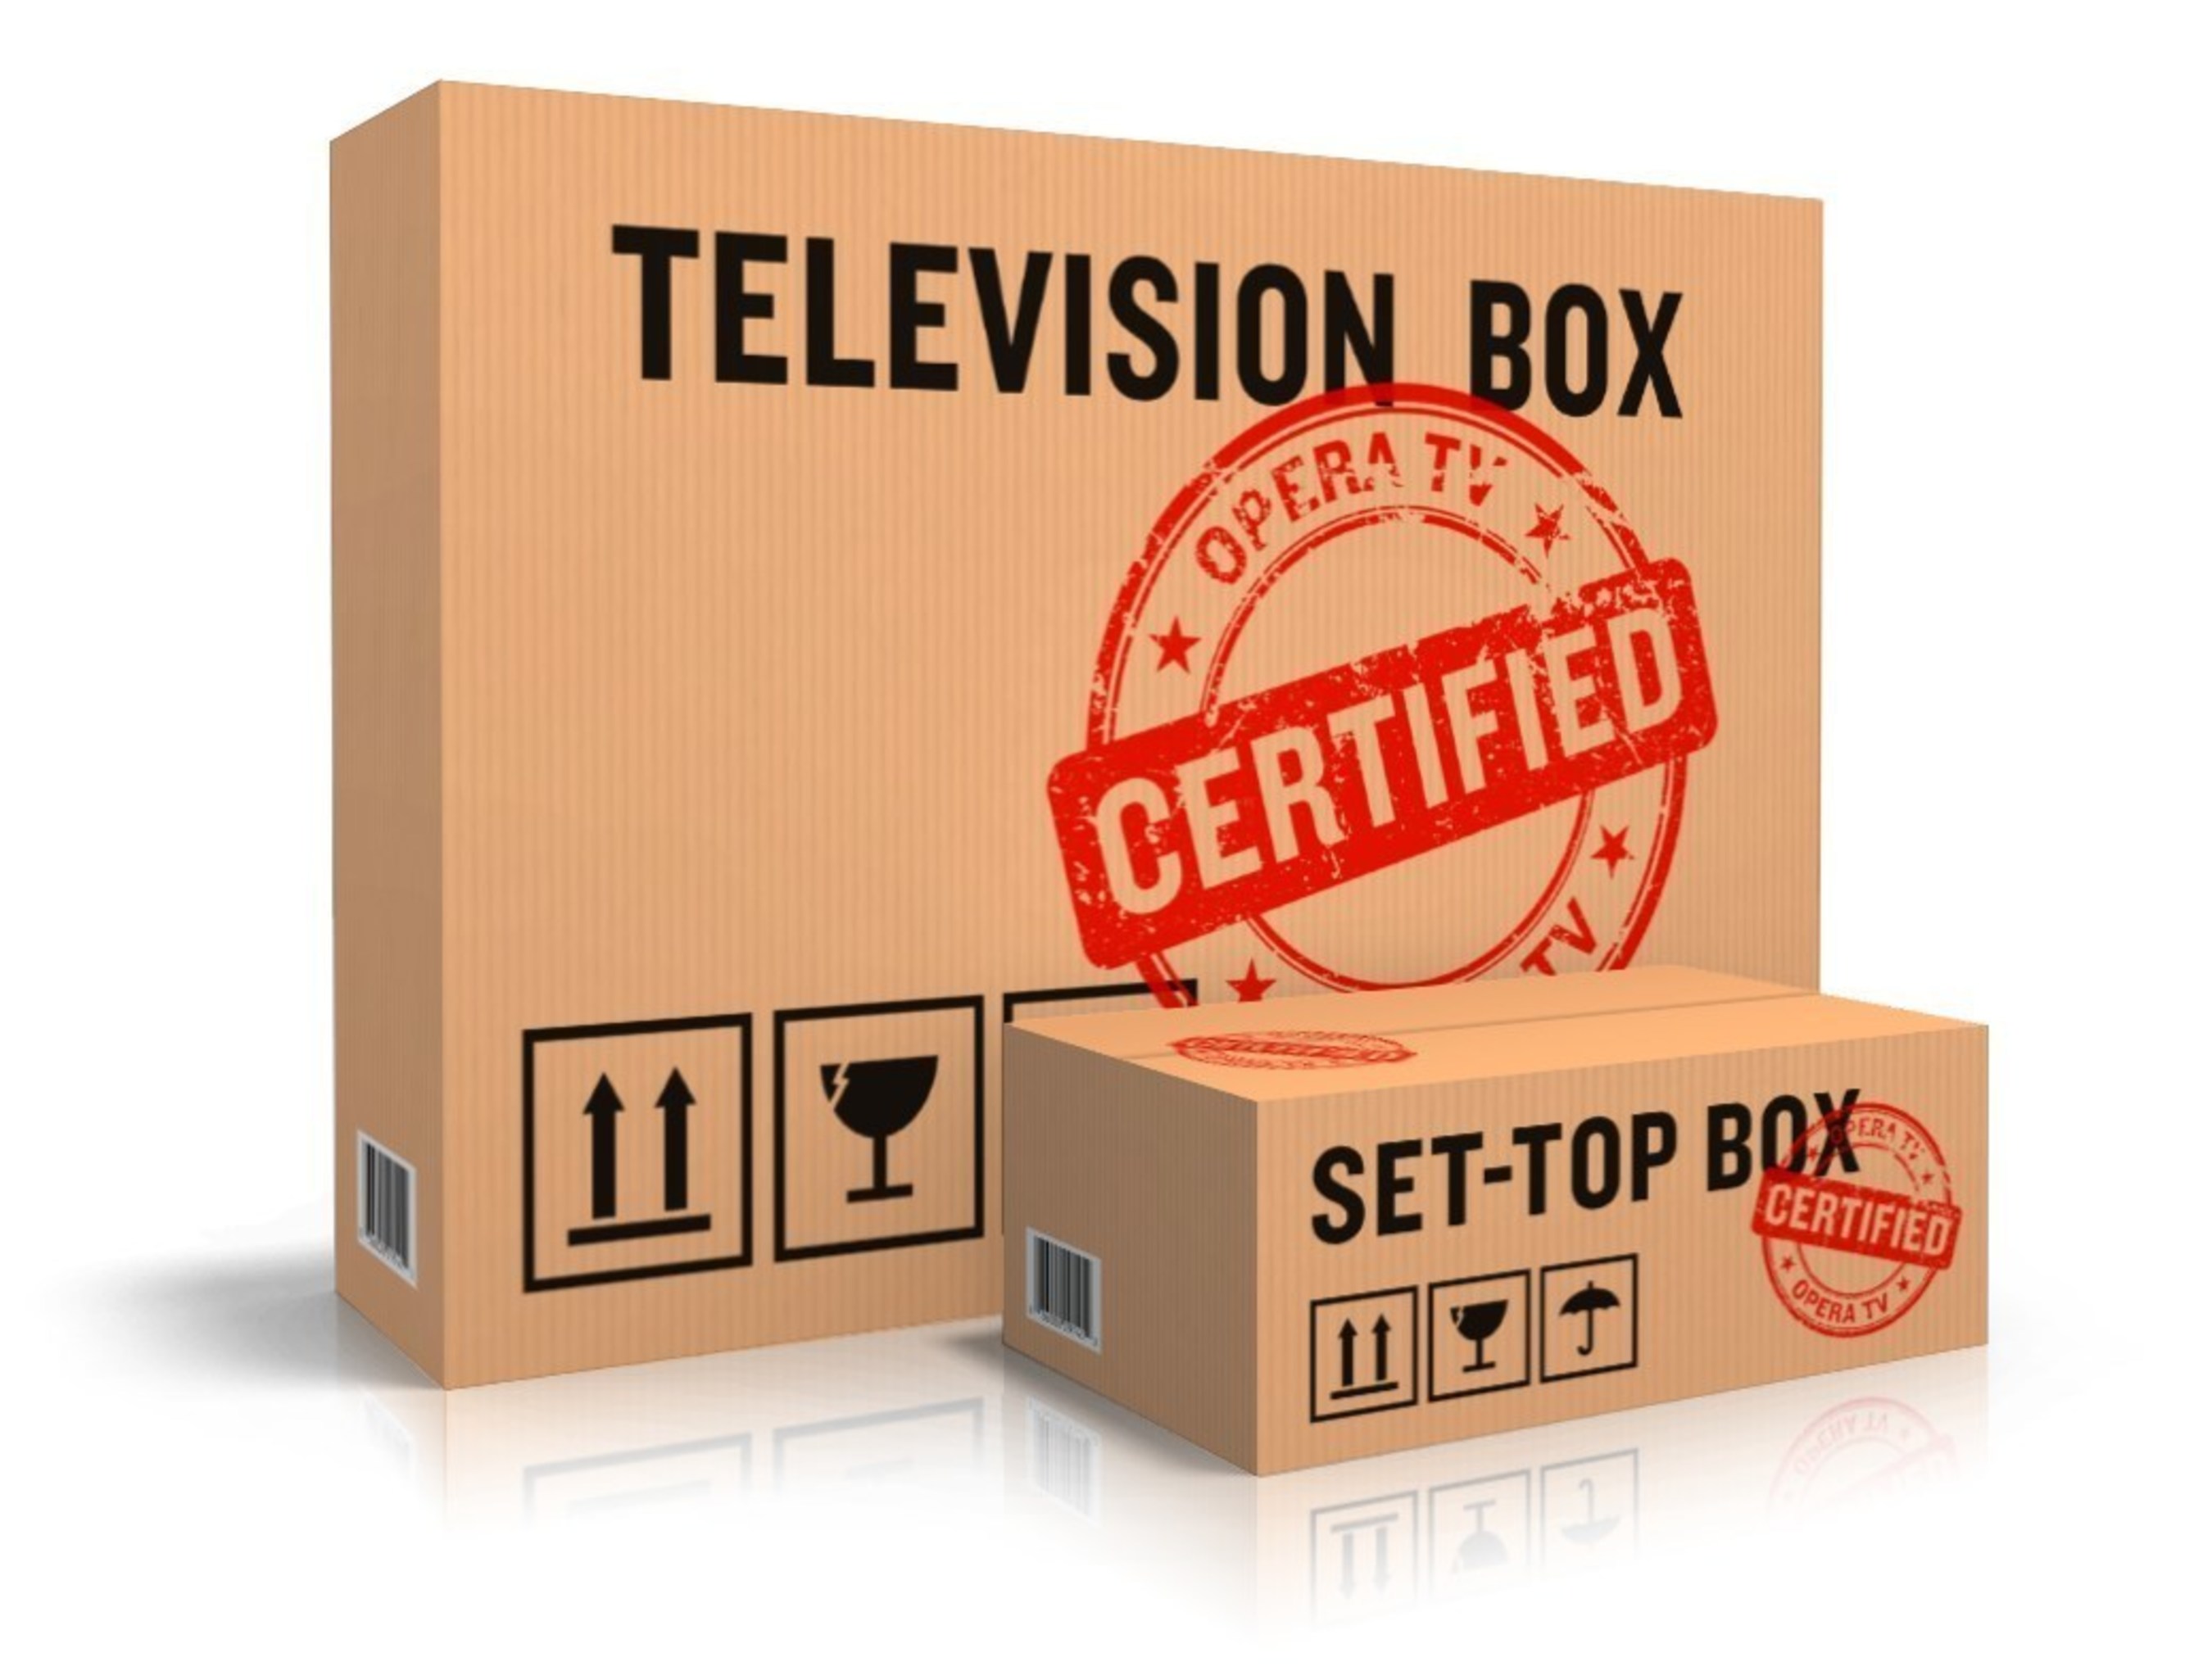 Opera TV Certification Program